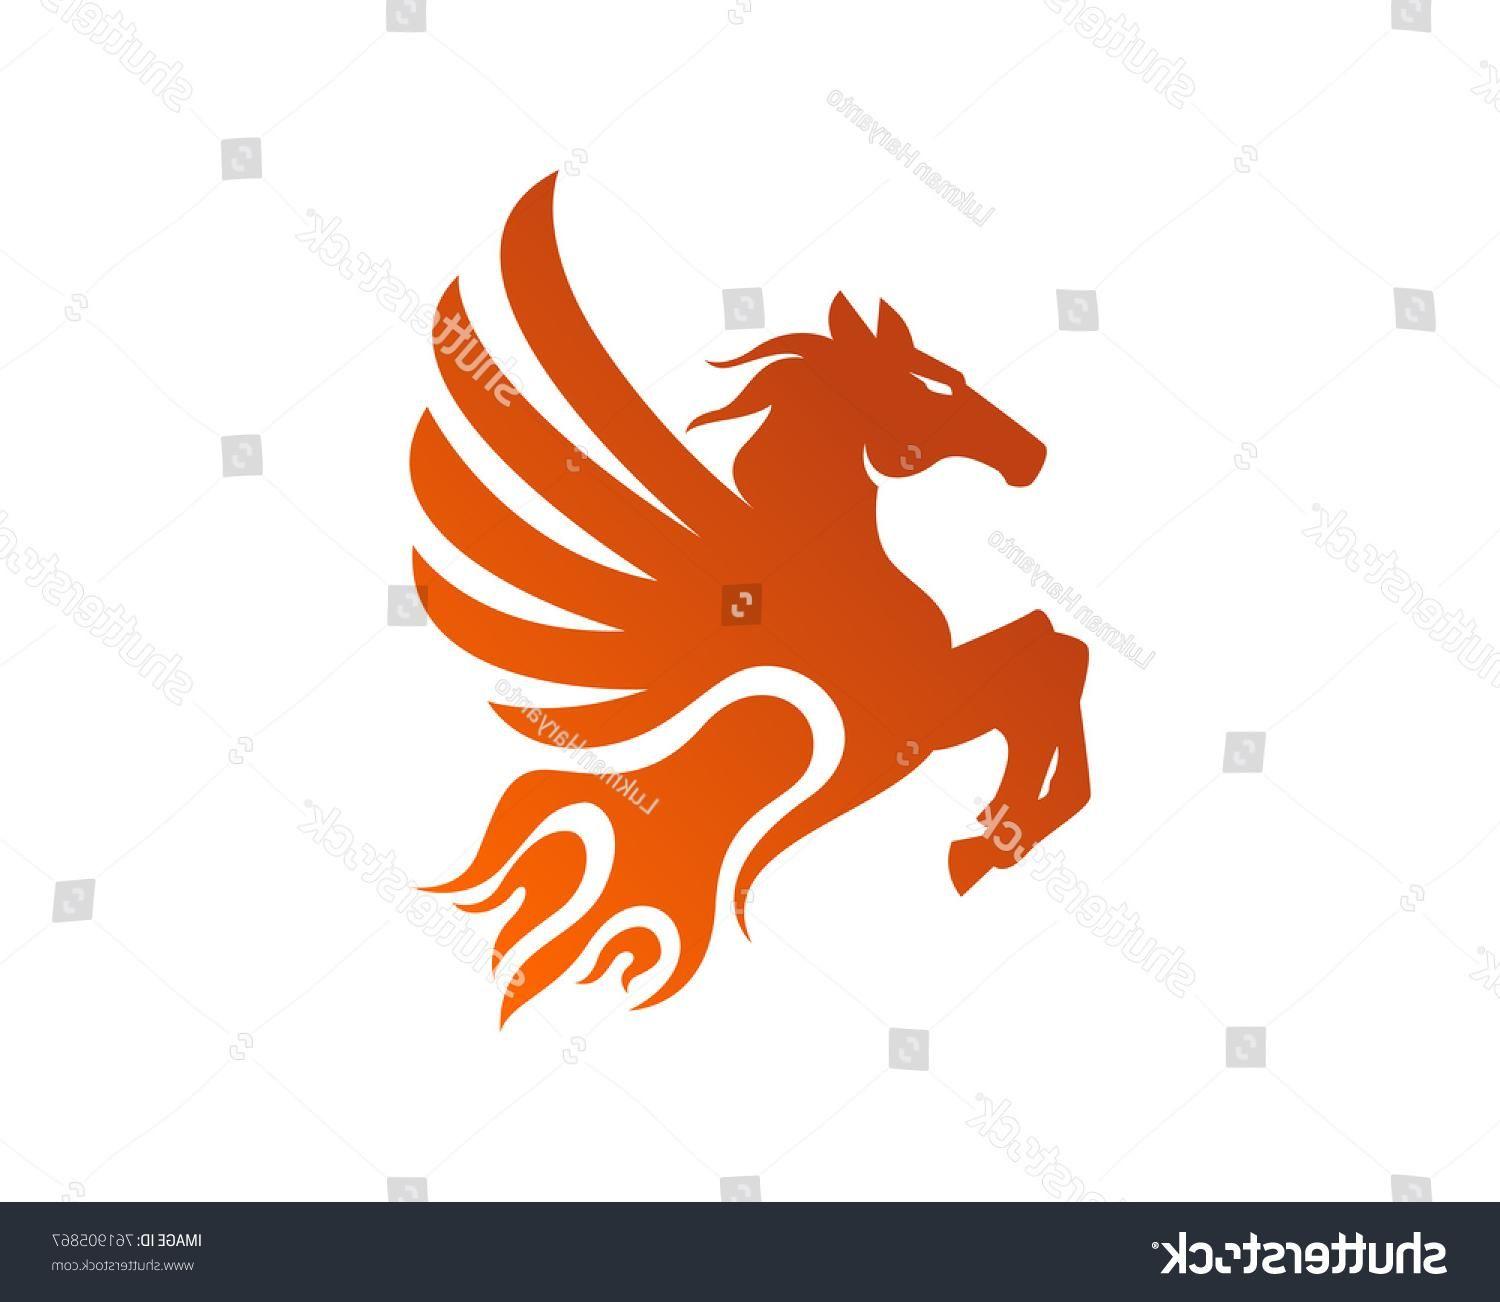 Flying Pegasus Logo - Best Free Stock Vector Fire Flying Pegasus Hot Angry Modern Wings